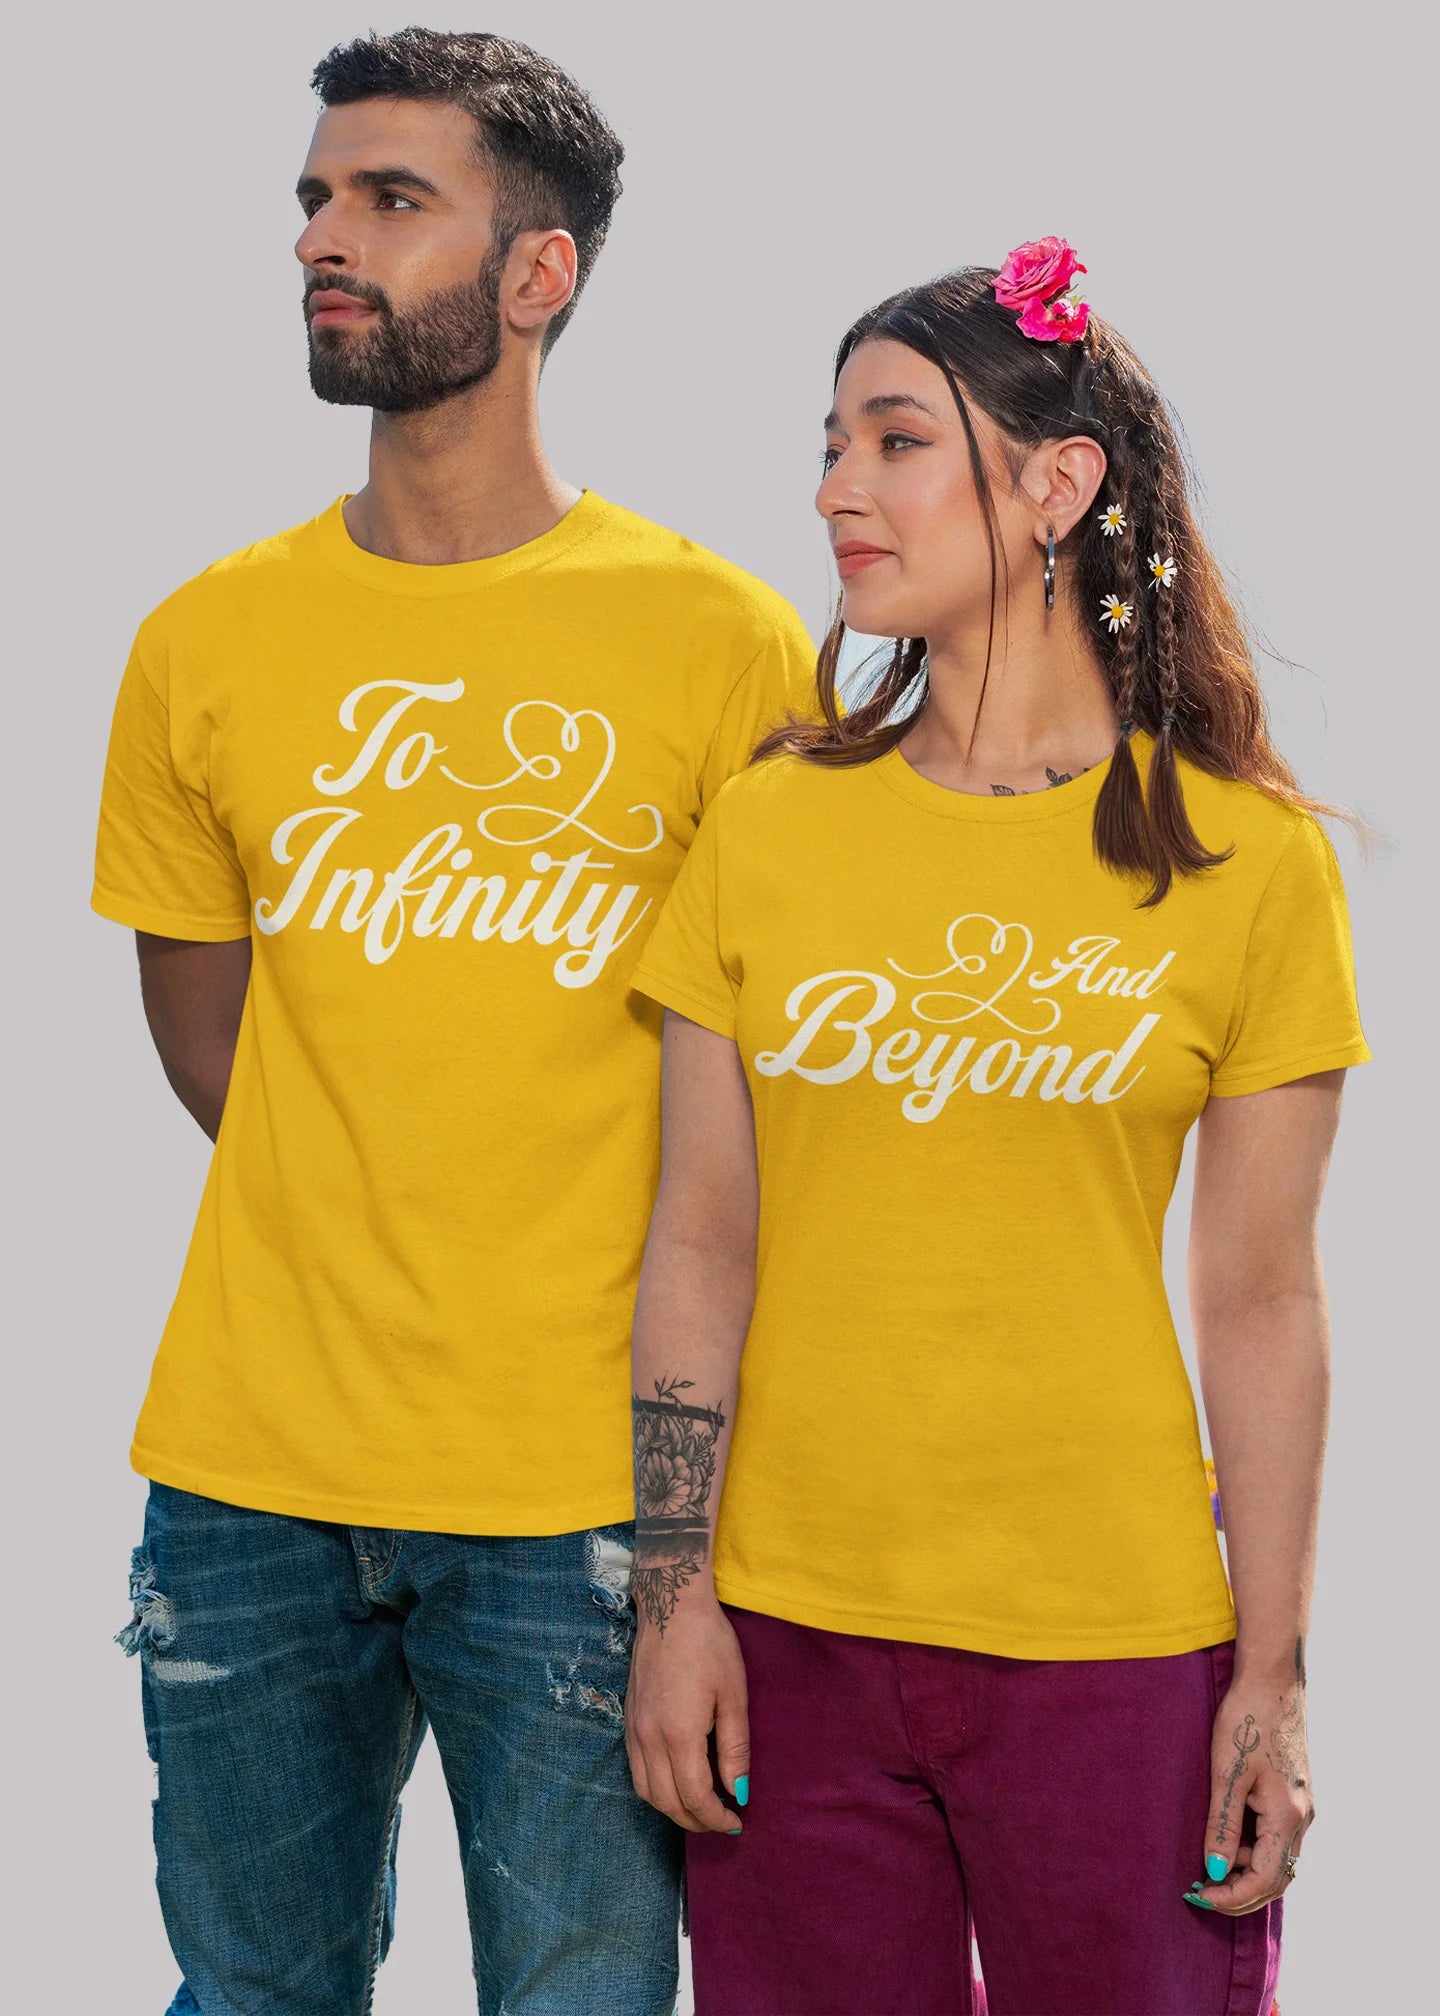 To infinity and beyond Printed Couple T-shirt